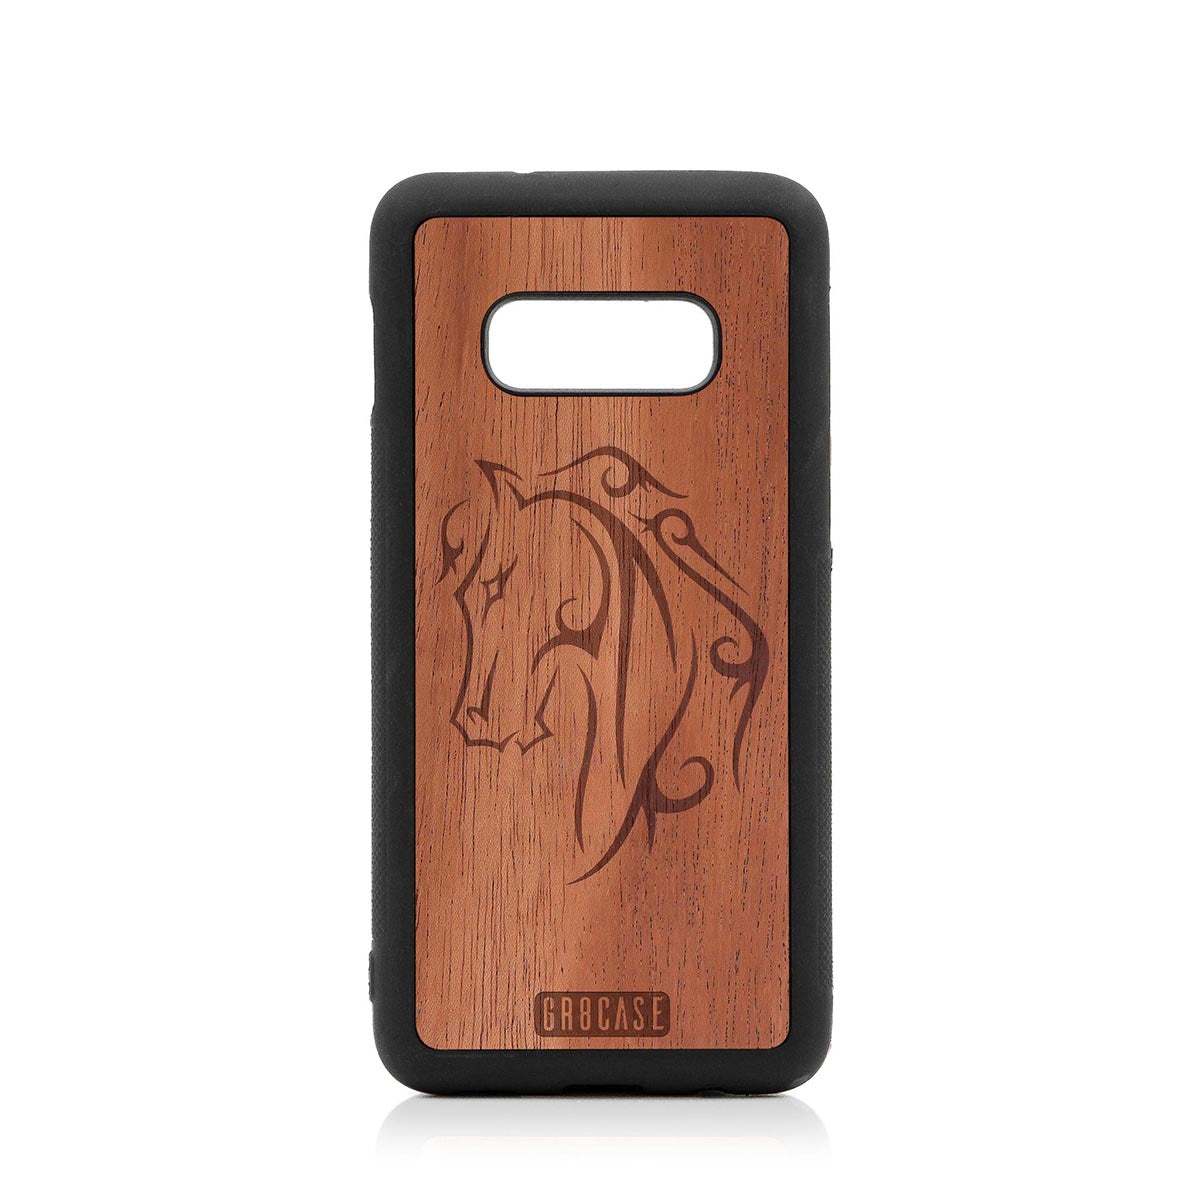 Horse Tattoo Design Wood Case Samsung Galaxy S10E by GR8CASE